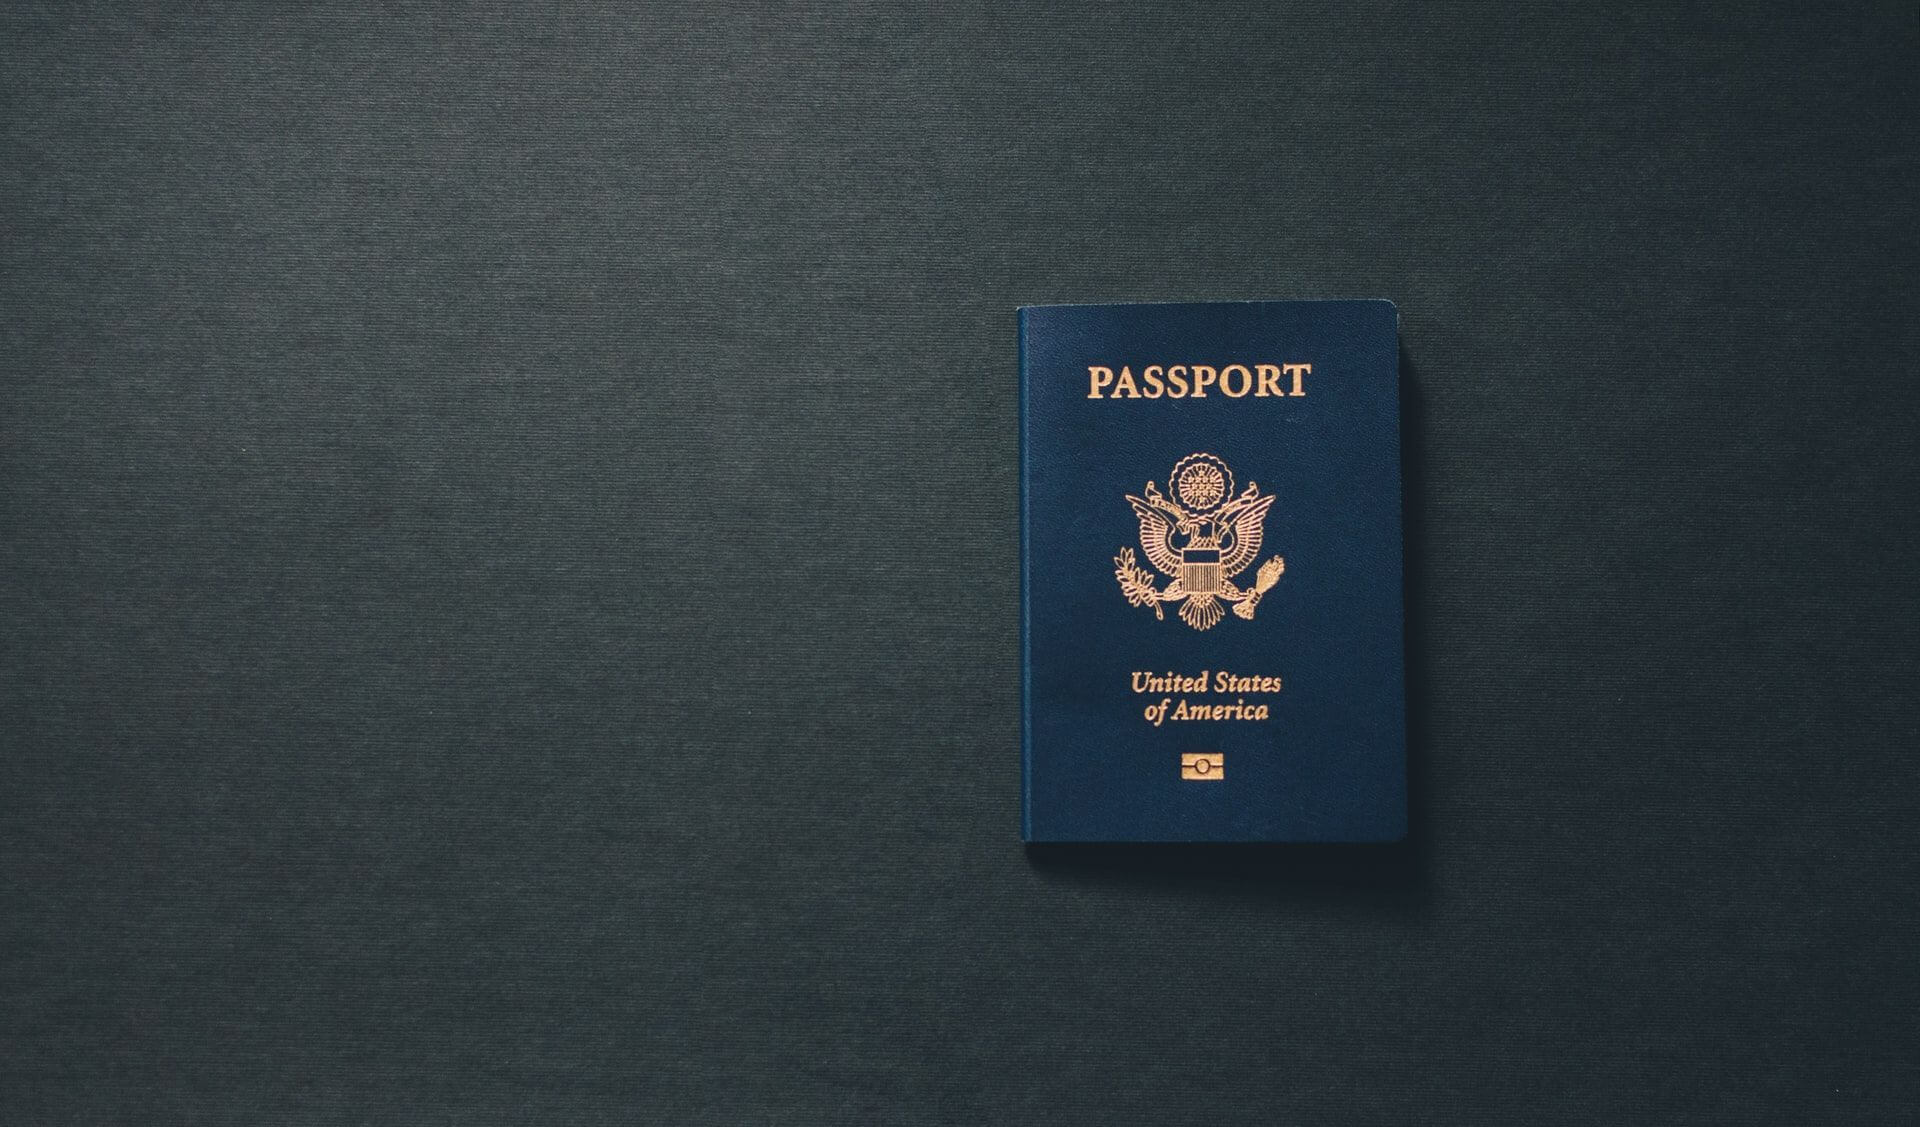 passport on a black surface